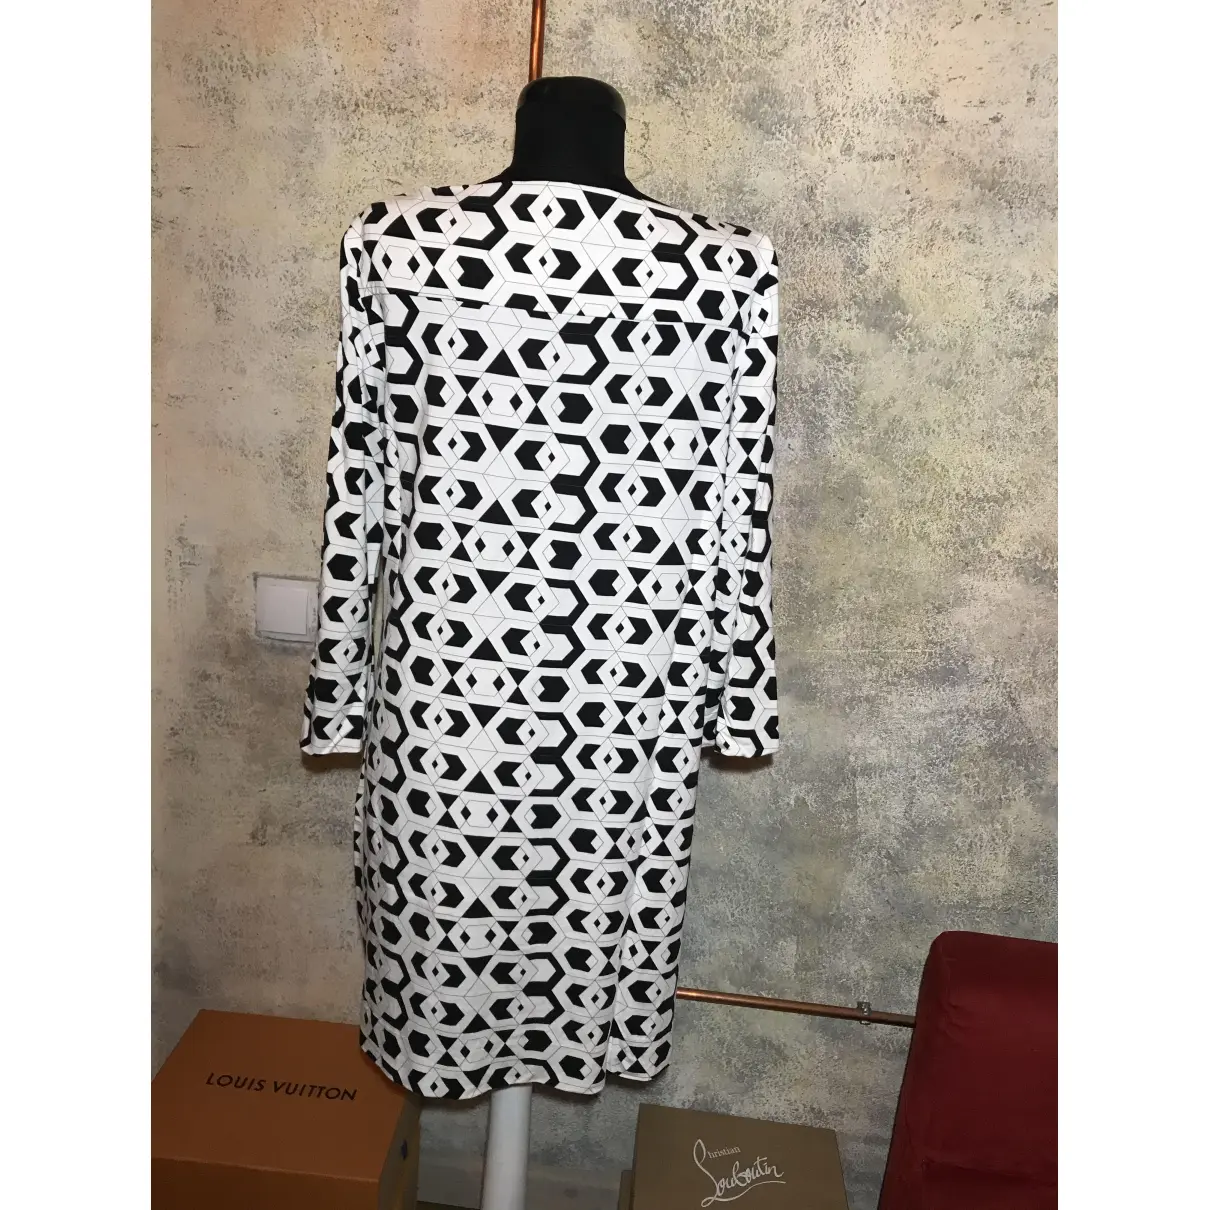 Diane Von Furstenberg Mid-length dress for sale